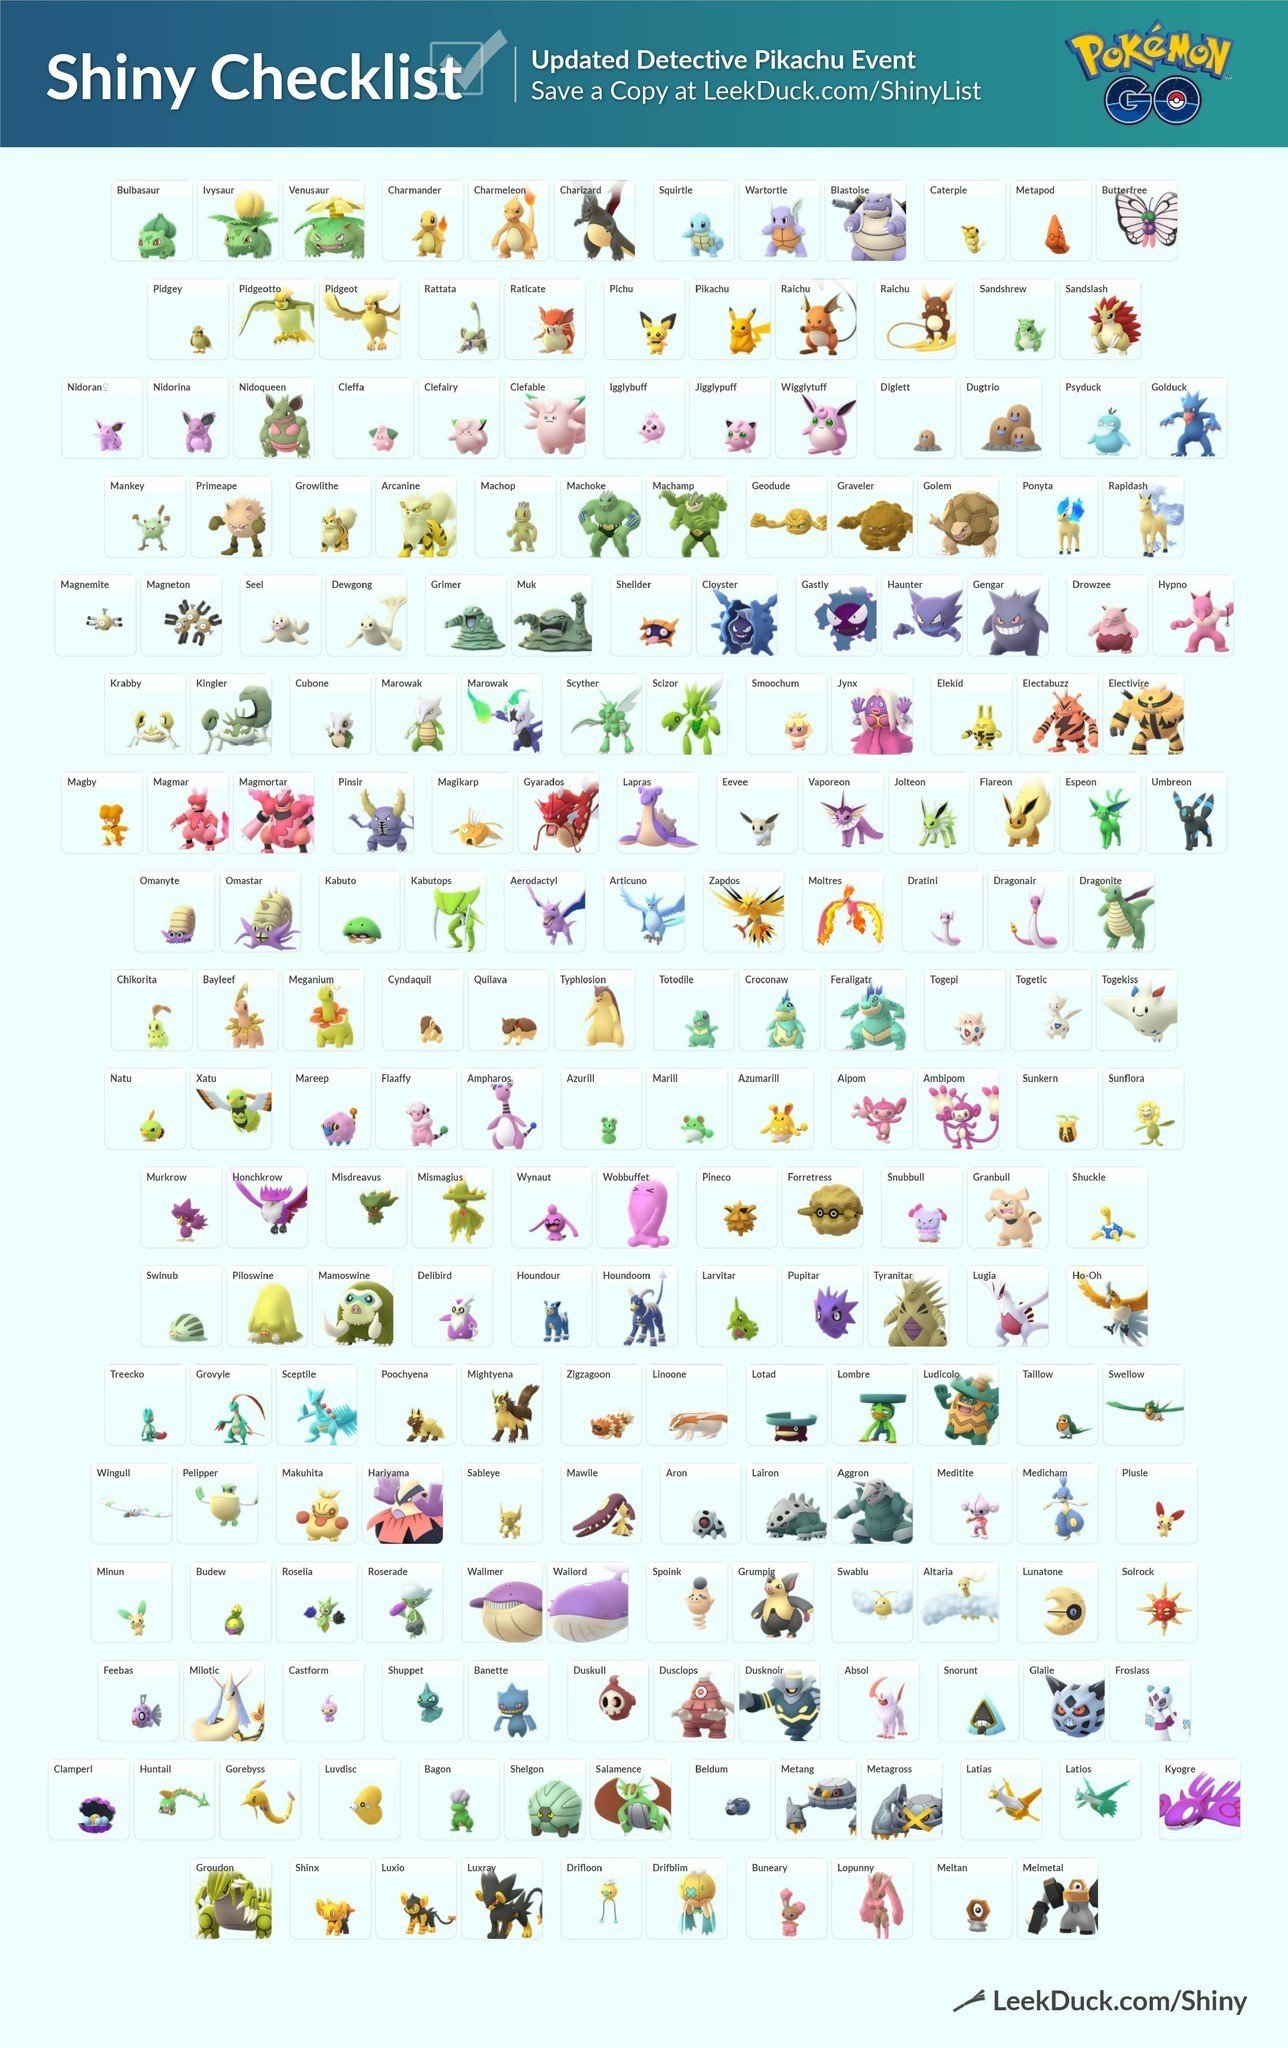 atraer Claraboya Molestar Pokémon GO: lista completa de Pokémon shiny o variocolor disponibles